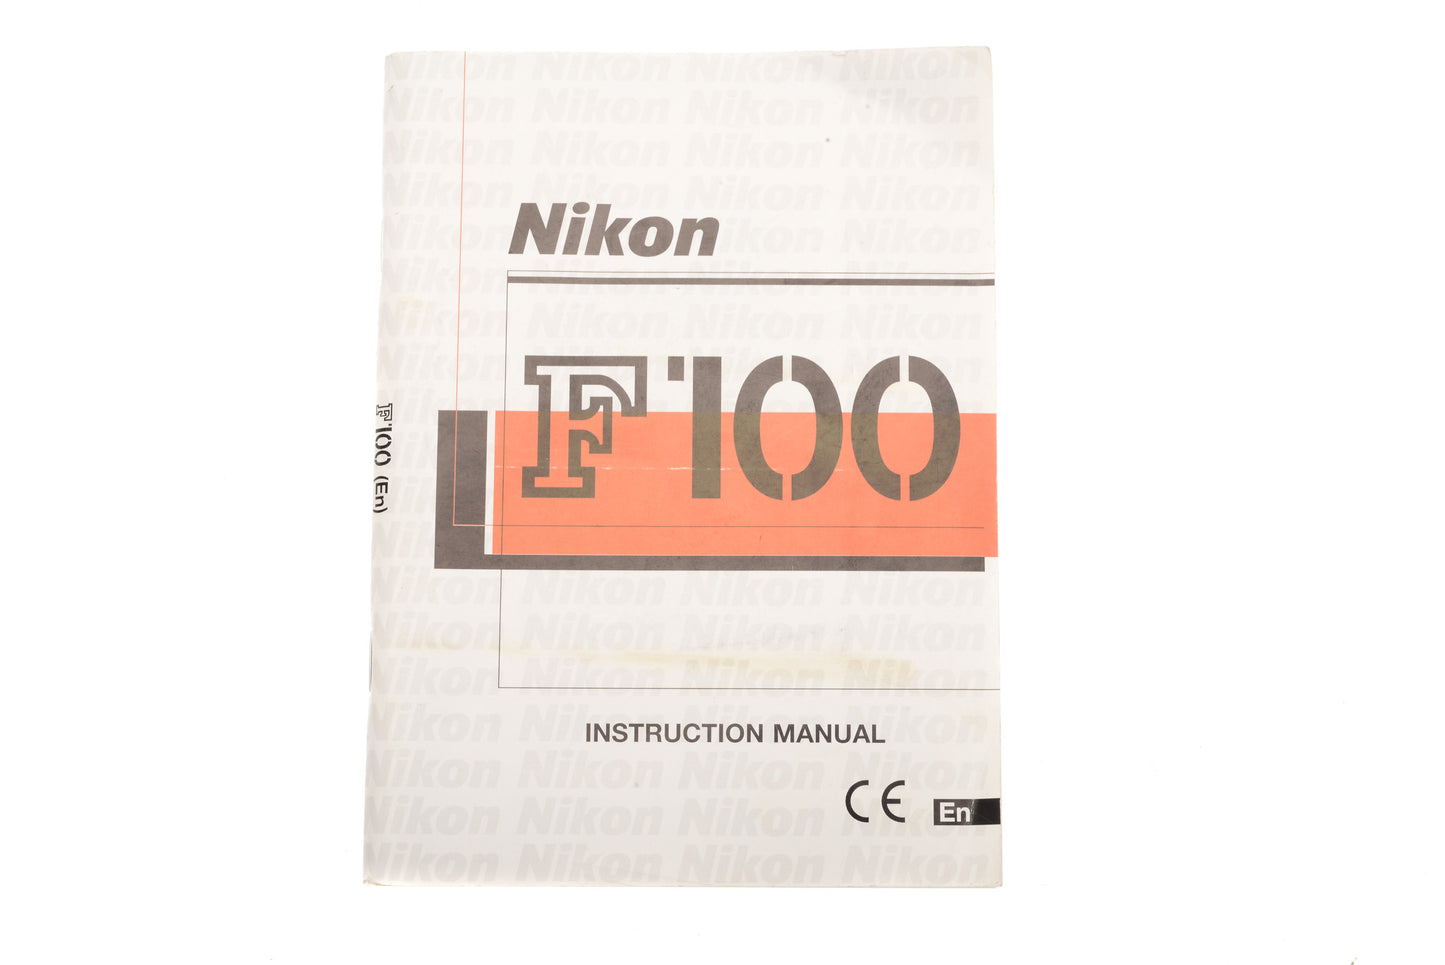 Extranjero camioneta erupción Nikon F100 Instruction Manual - Accessory